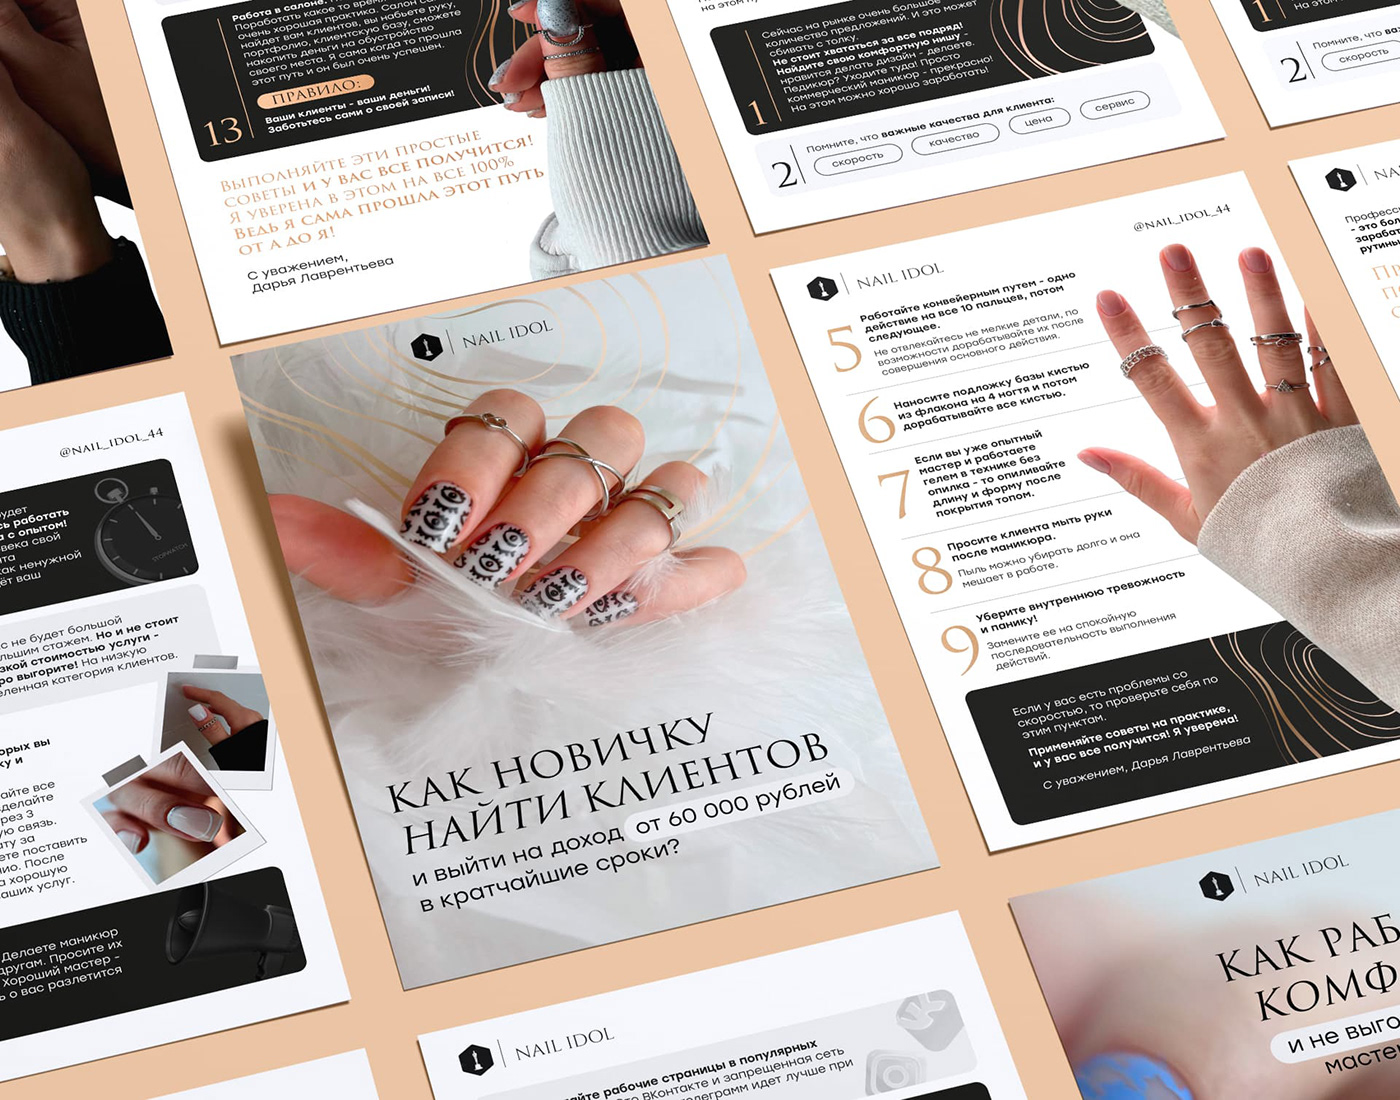 Гайд чек-лист инфопродукт презентация pdf nails manicure дизайн гайда дизайн инфопродукта оформление гайда